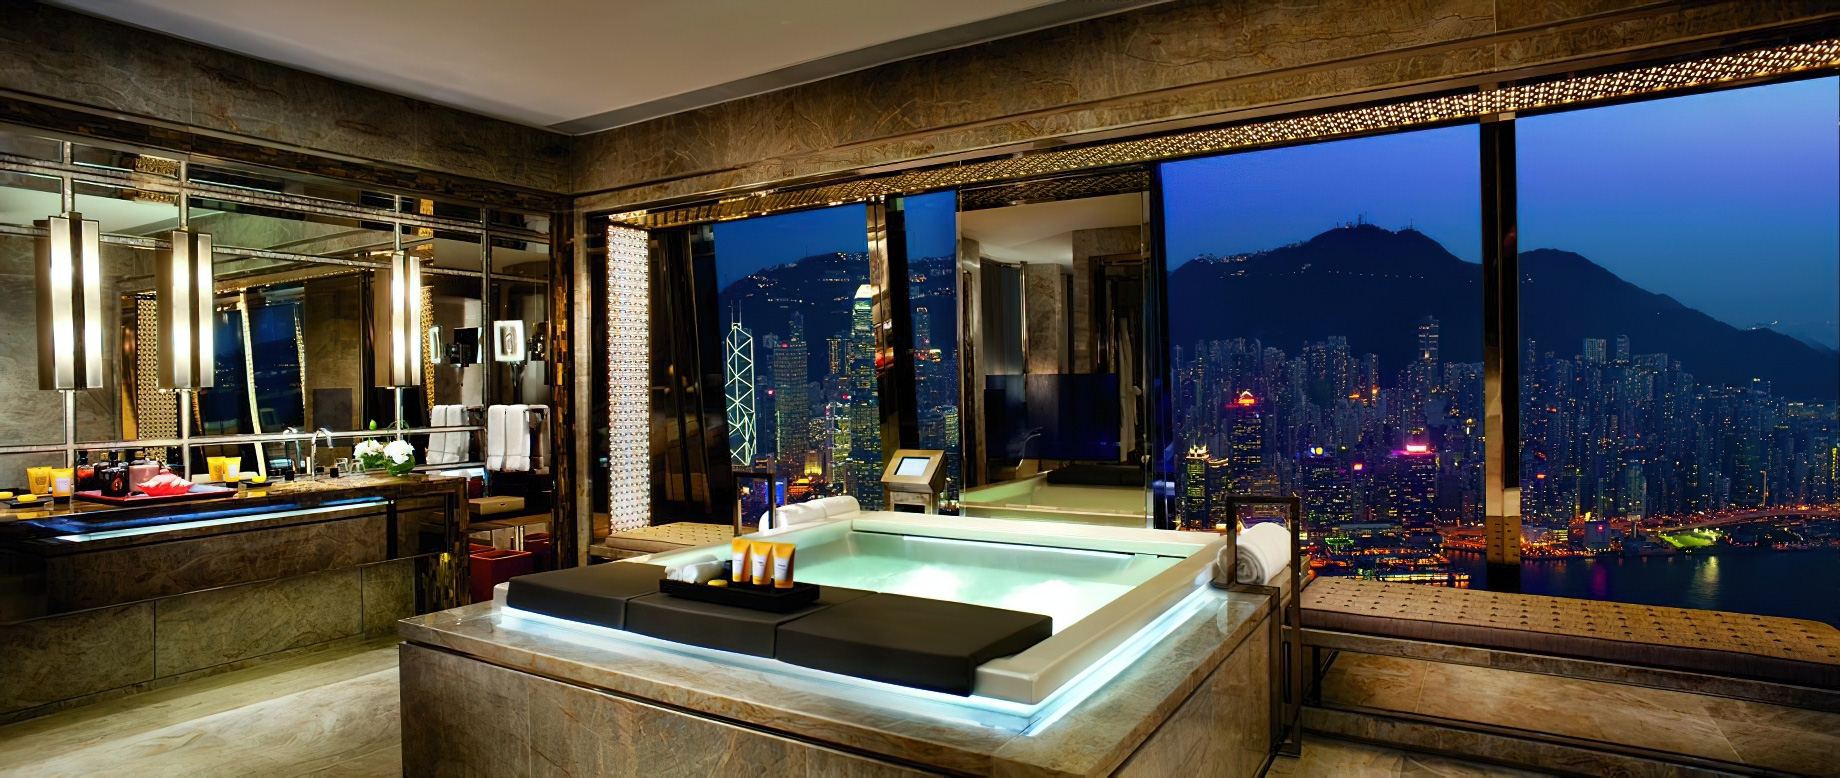 The Ritz-Carlton, Hong Kong Hotel - West Kowloon, Hong Kong - The Ritz-Carlton Suite Victoria Harbour Bathroom